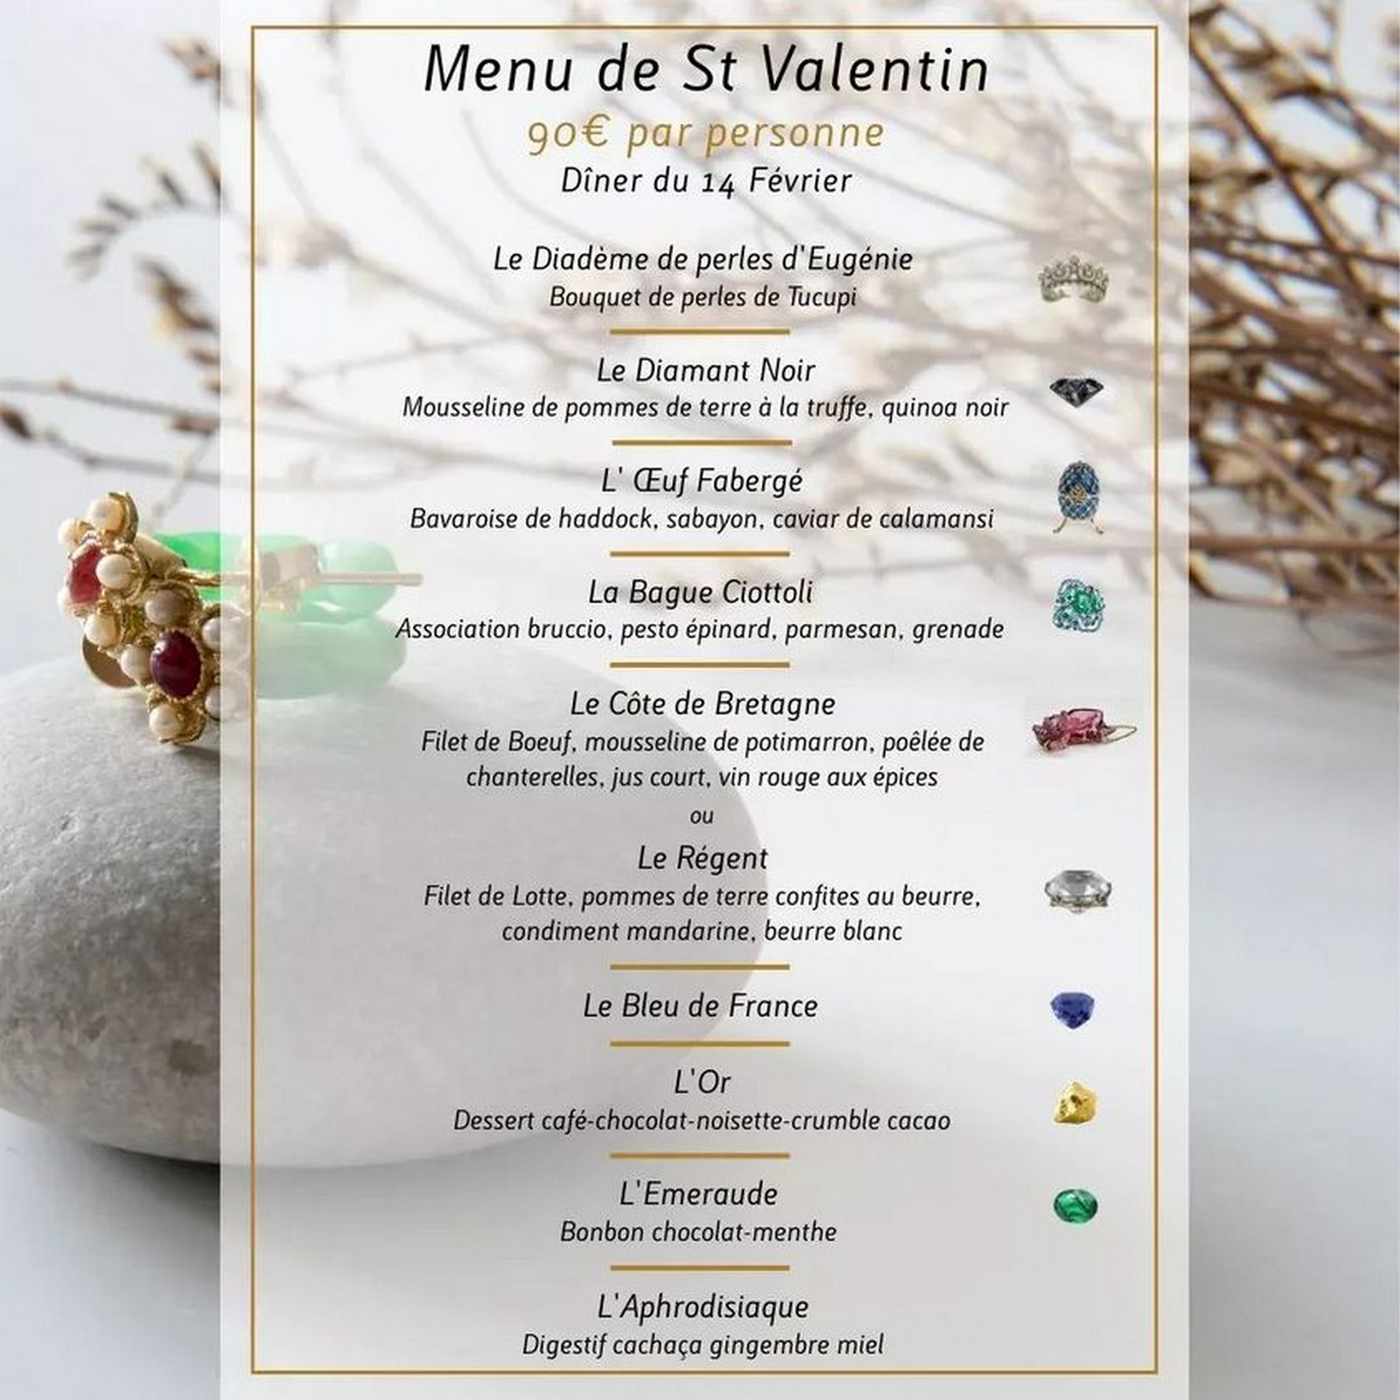 menu_st_valentin_frelon_dor.jpg